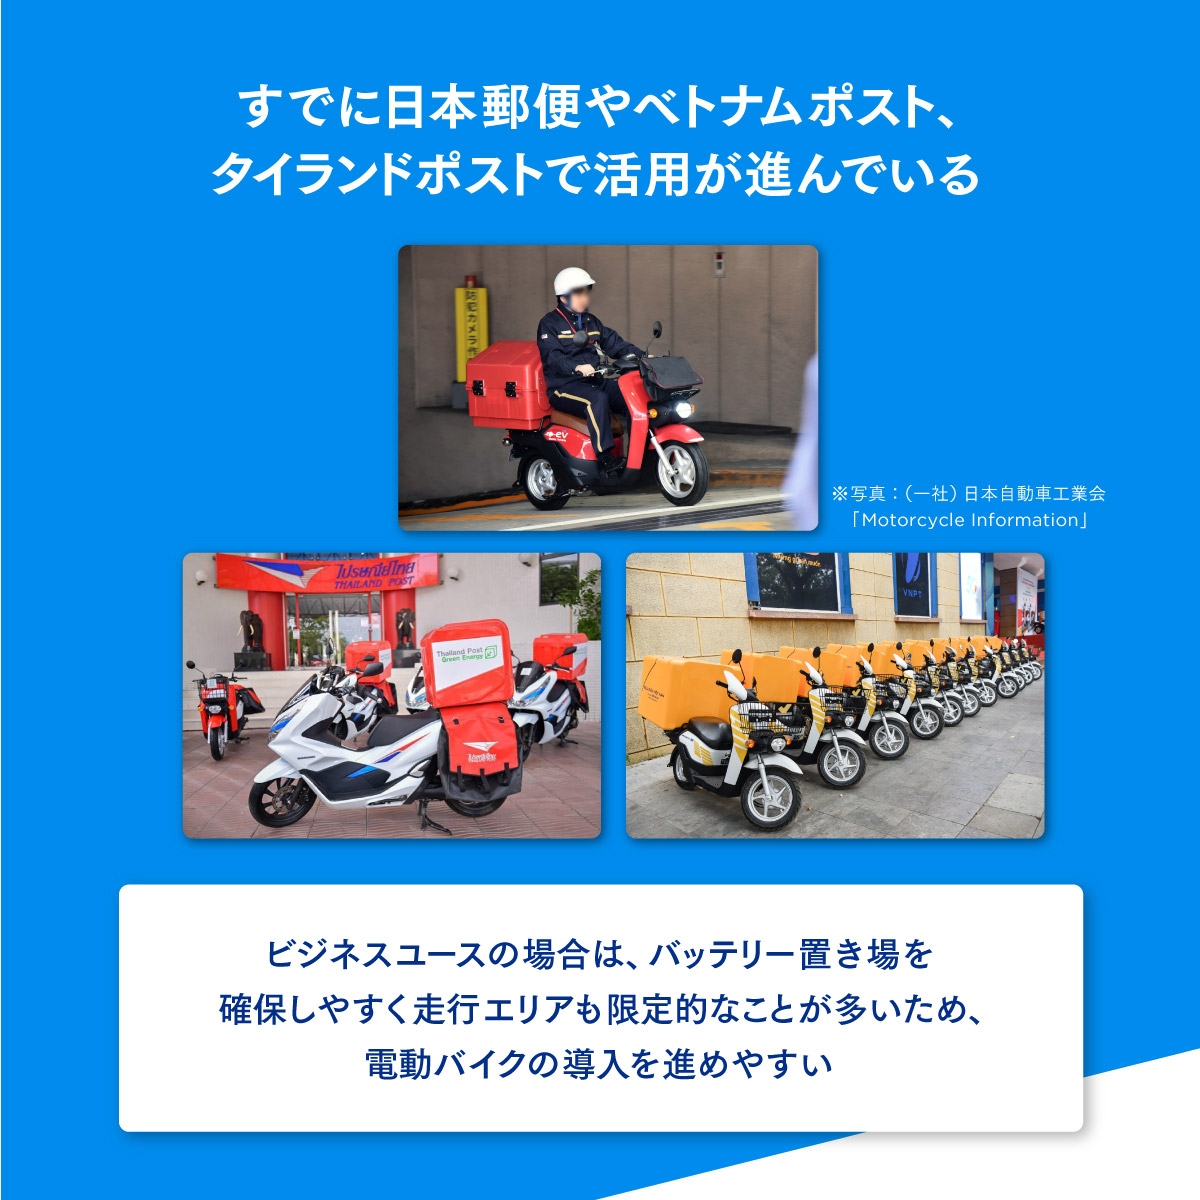 「Honda e:ビジネスバイク」シリーズは日本郵便、ベトナムポスト、タイランドポストで活用